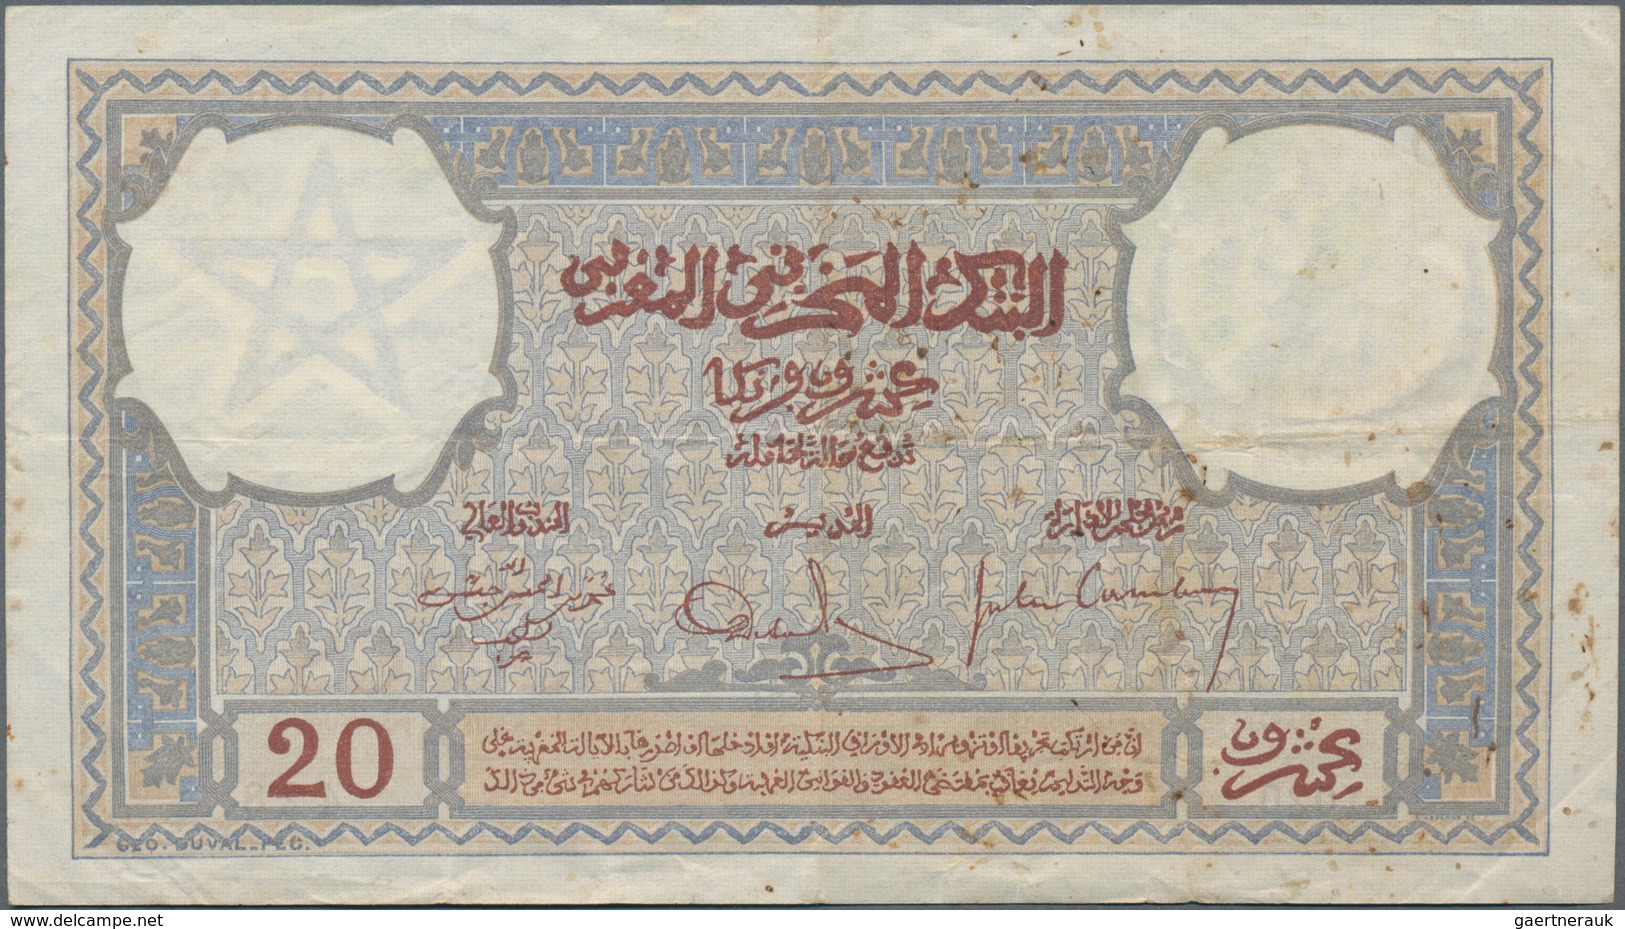 Morocco / Marokko: Banque D'État Du Maroc 20 Francs With Rare Date December 2nd 1931, P.18a, Still S - Morocco